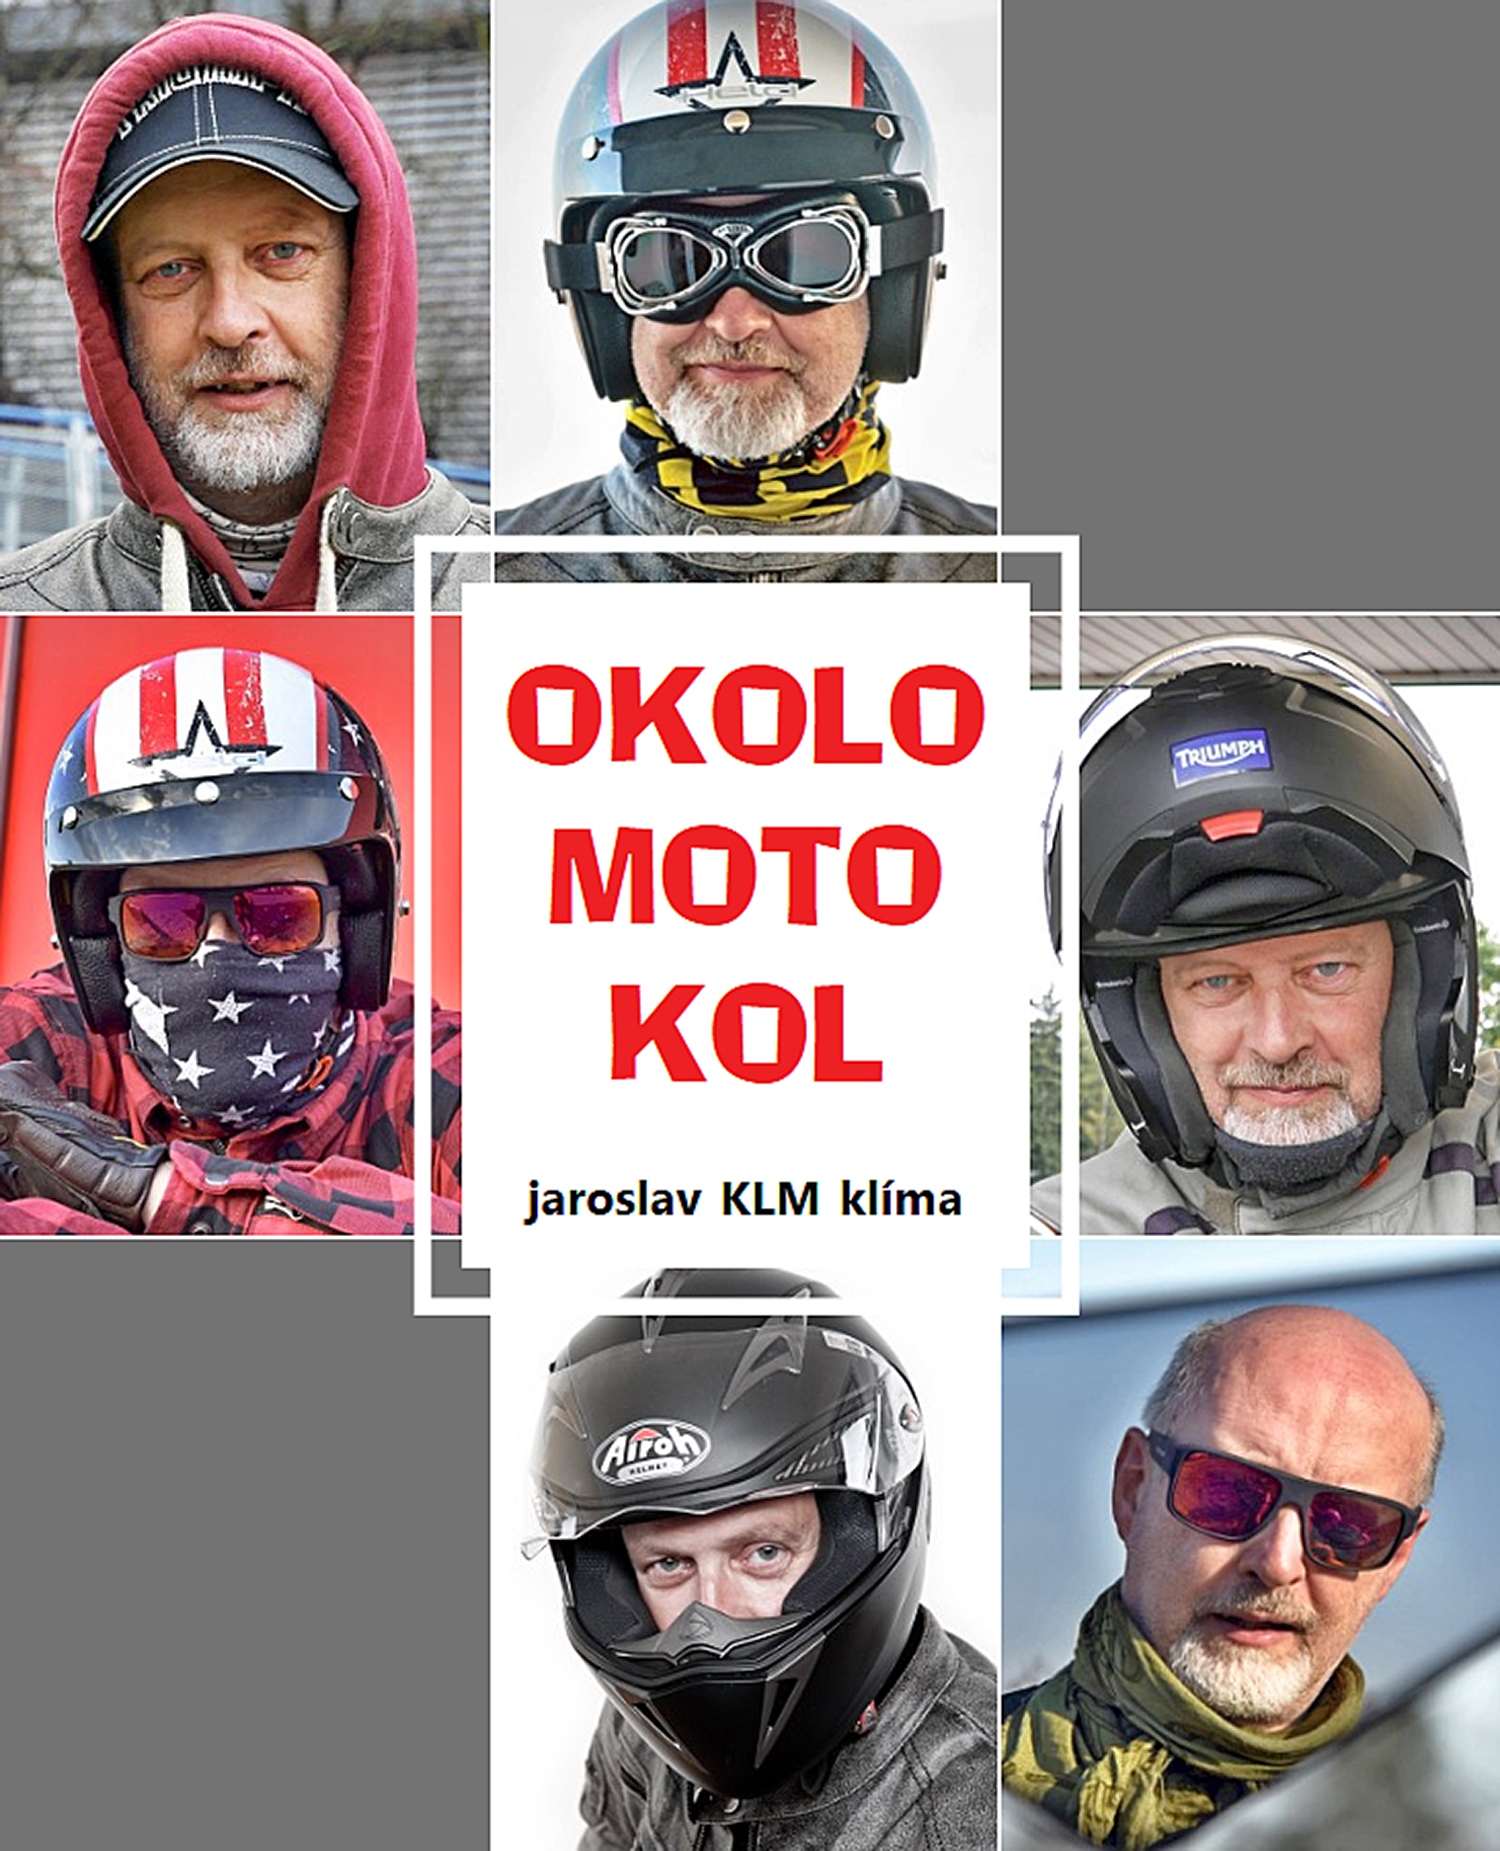 OKOLO MOTO KOL by KLM 02